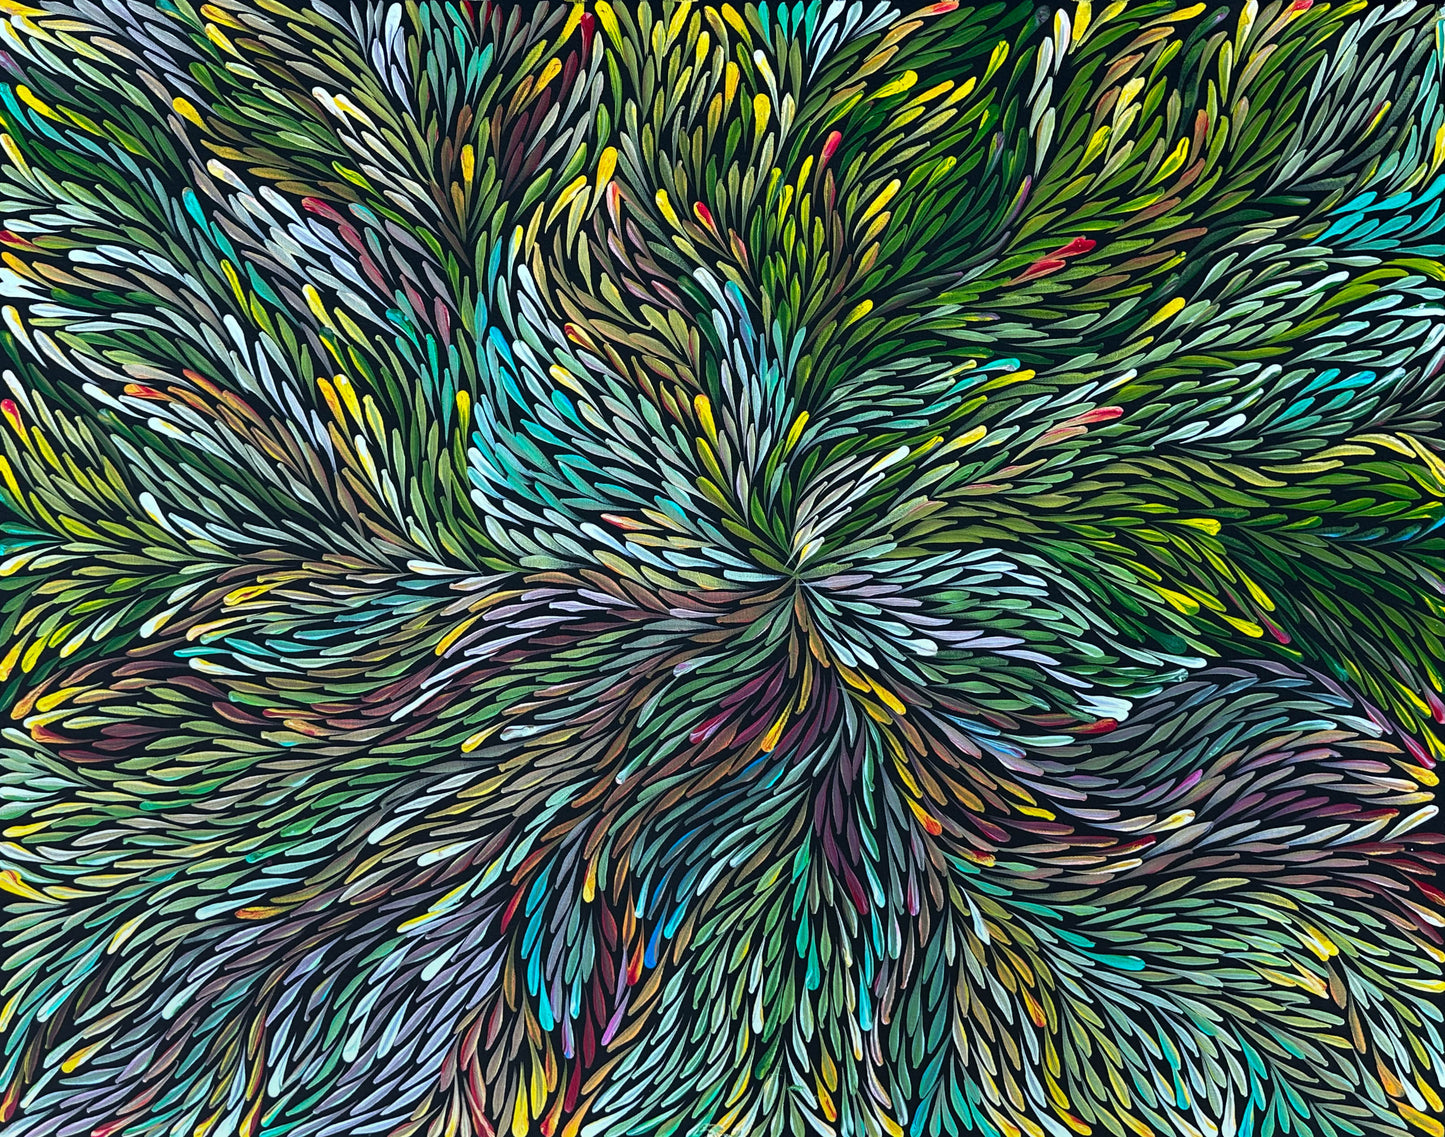 Jeannie Pitjara Petyarre + Utopia + Bush Medicine Leaves + Leaves + Movement + Colour + Indigenous Art + Artist + Australian Art + Aboriginal Art + Darwin Based Gallery + Art Work + Painting + Aboriginal Culture + Bush Medicine 